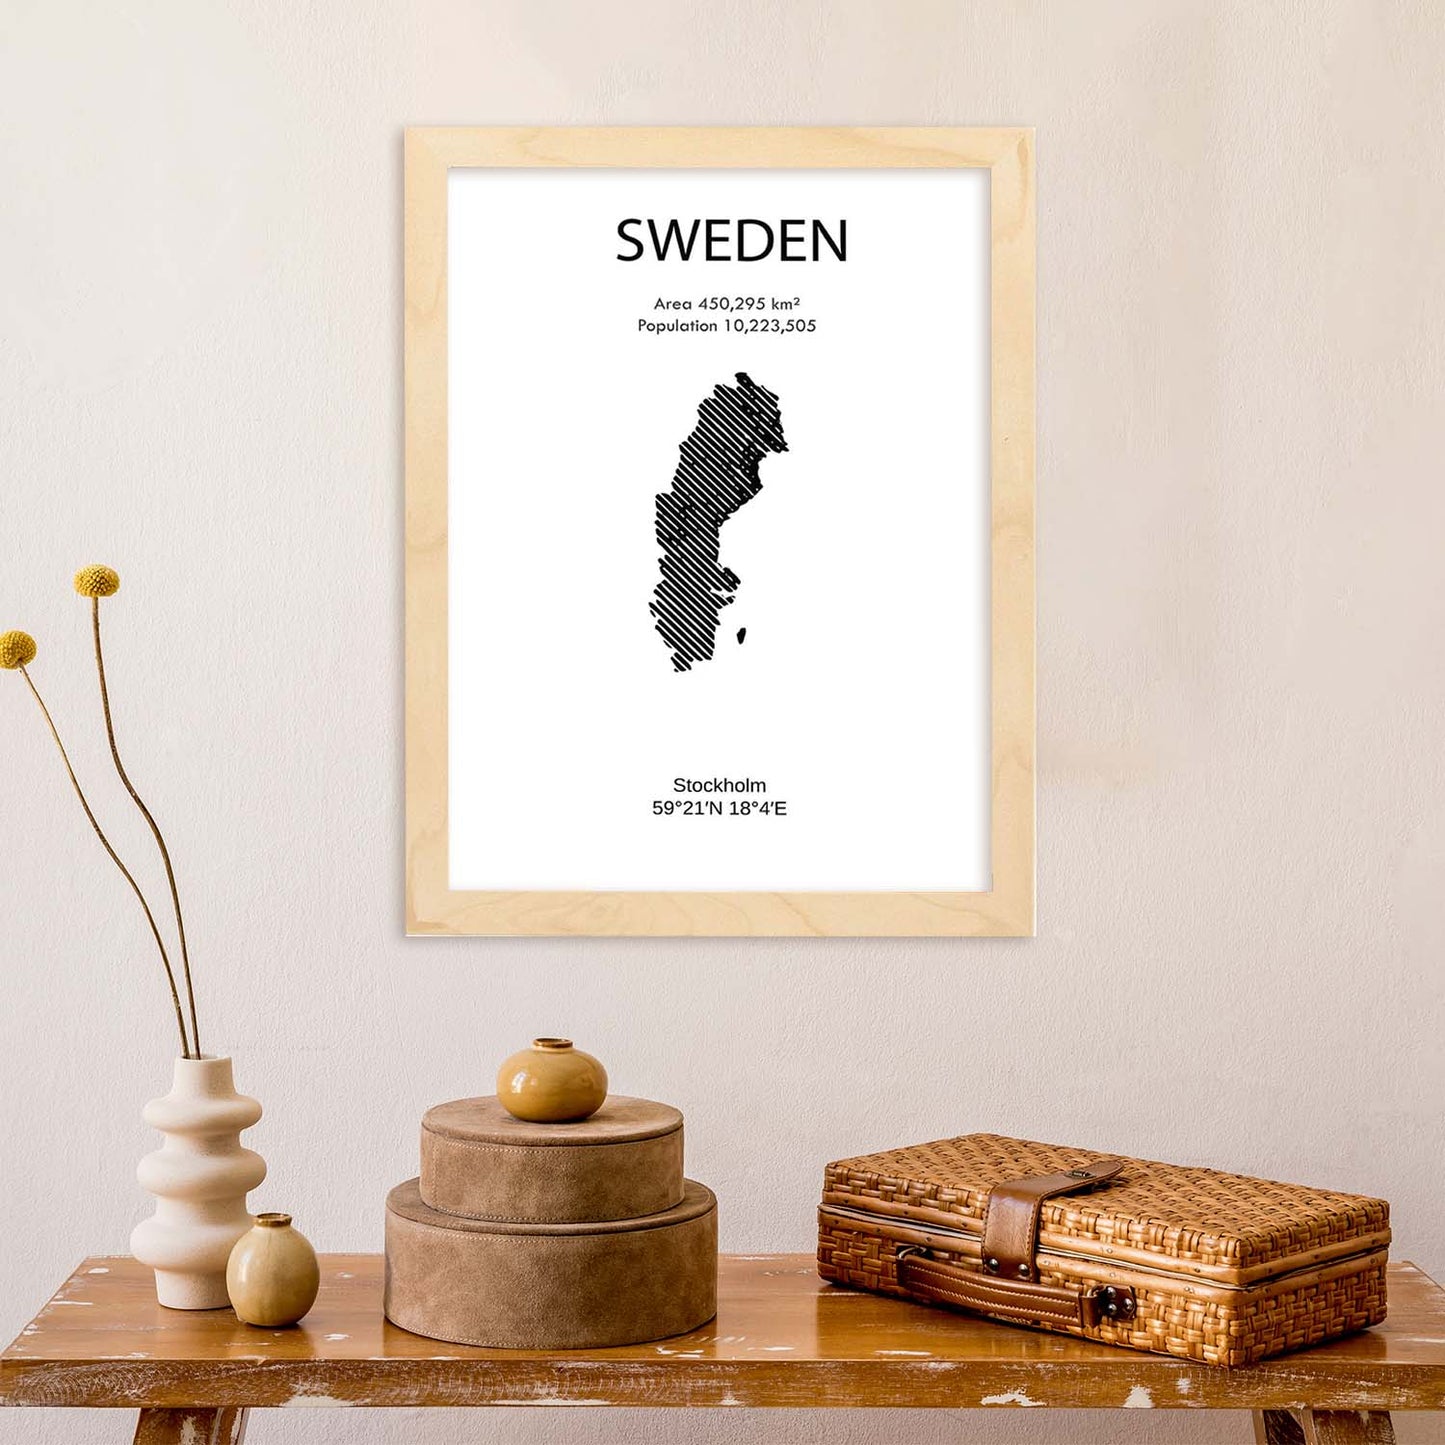 Poster de Suecia. Láminas de paises y continentes del mundo.-Artwork-Nacnic-Nacnic Estudio SL